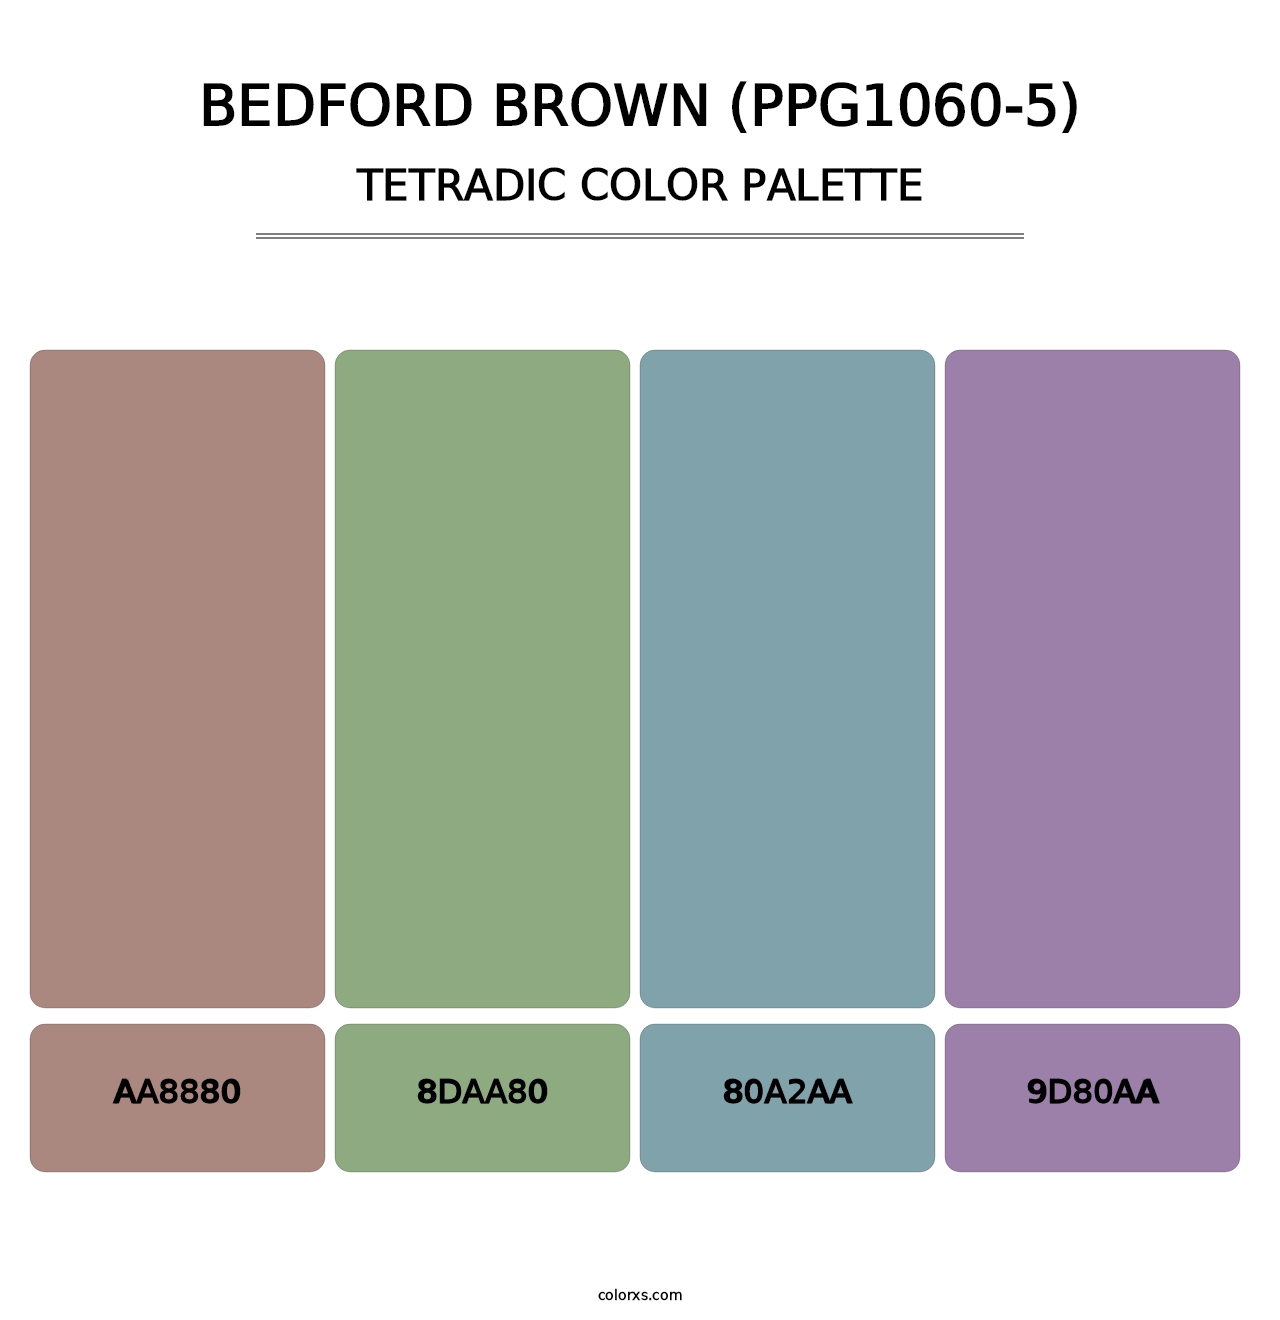 Bedford Brown (PPG1060-5) - Tetradic Color Palette